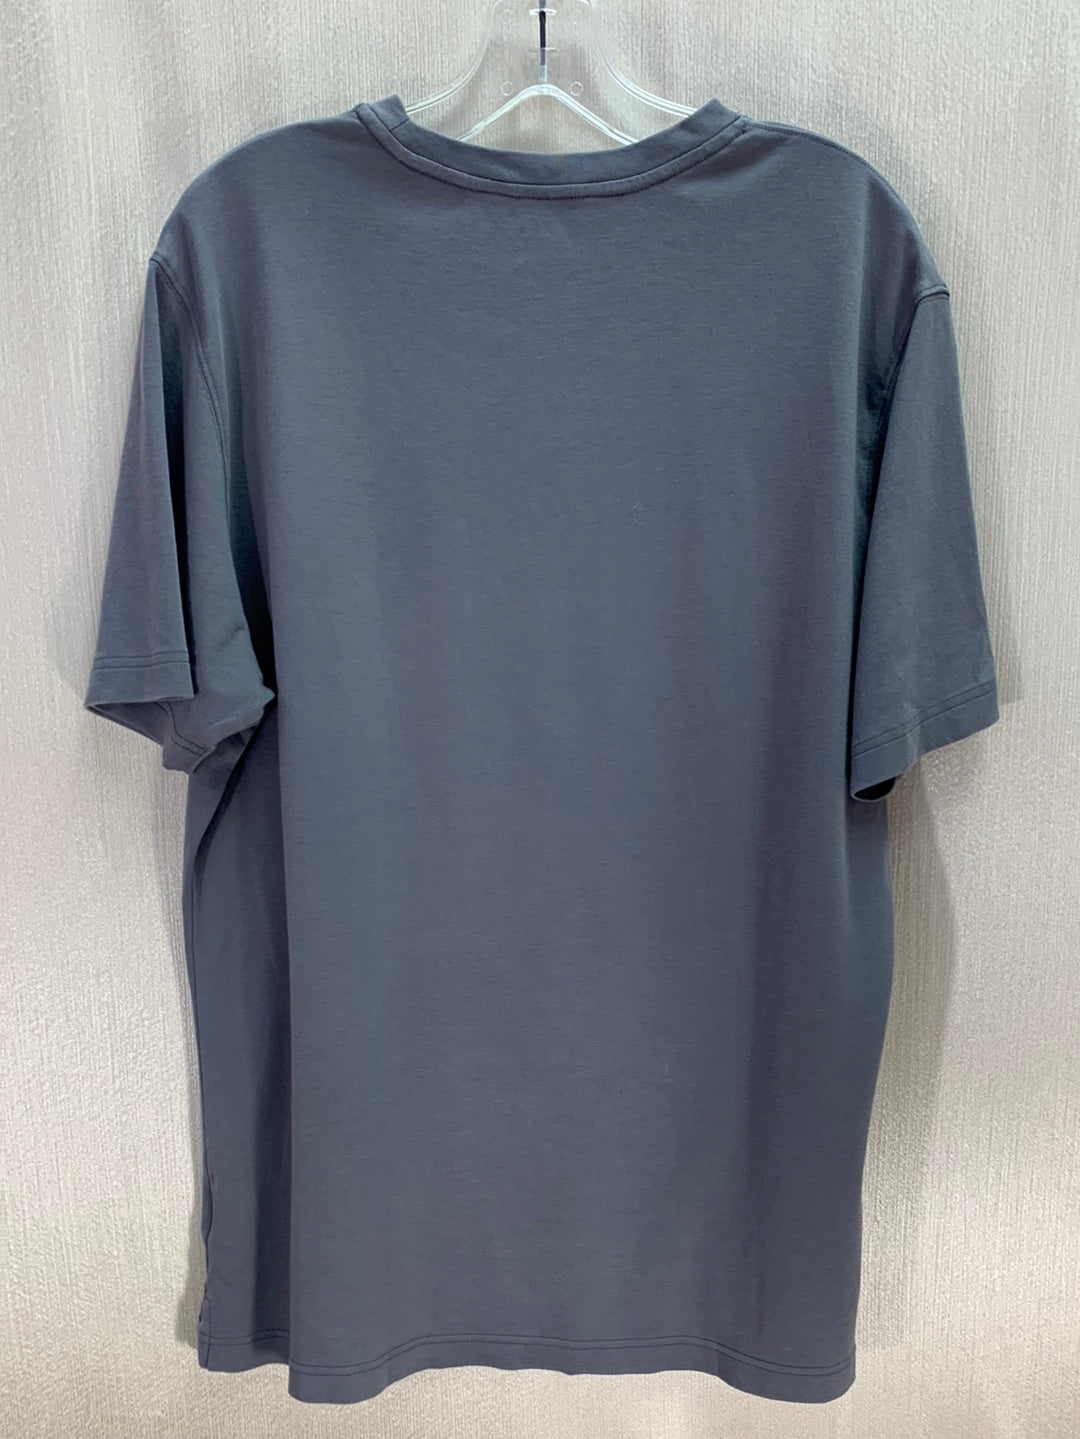 ROBERT BARAKETT grey Pima Cotton Short Sleeve T-Shirt - XL